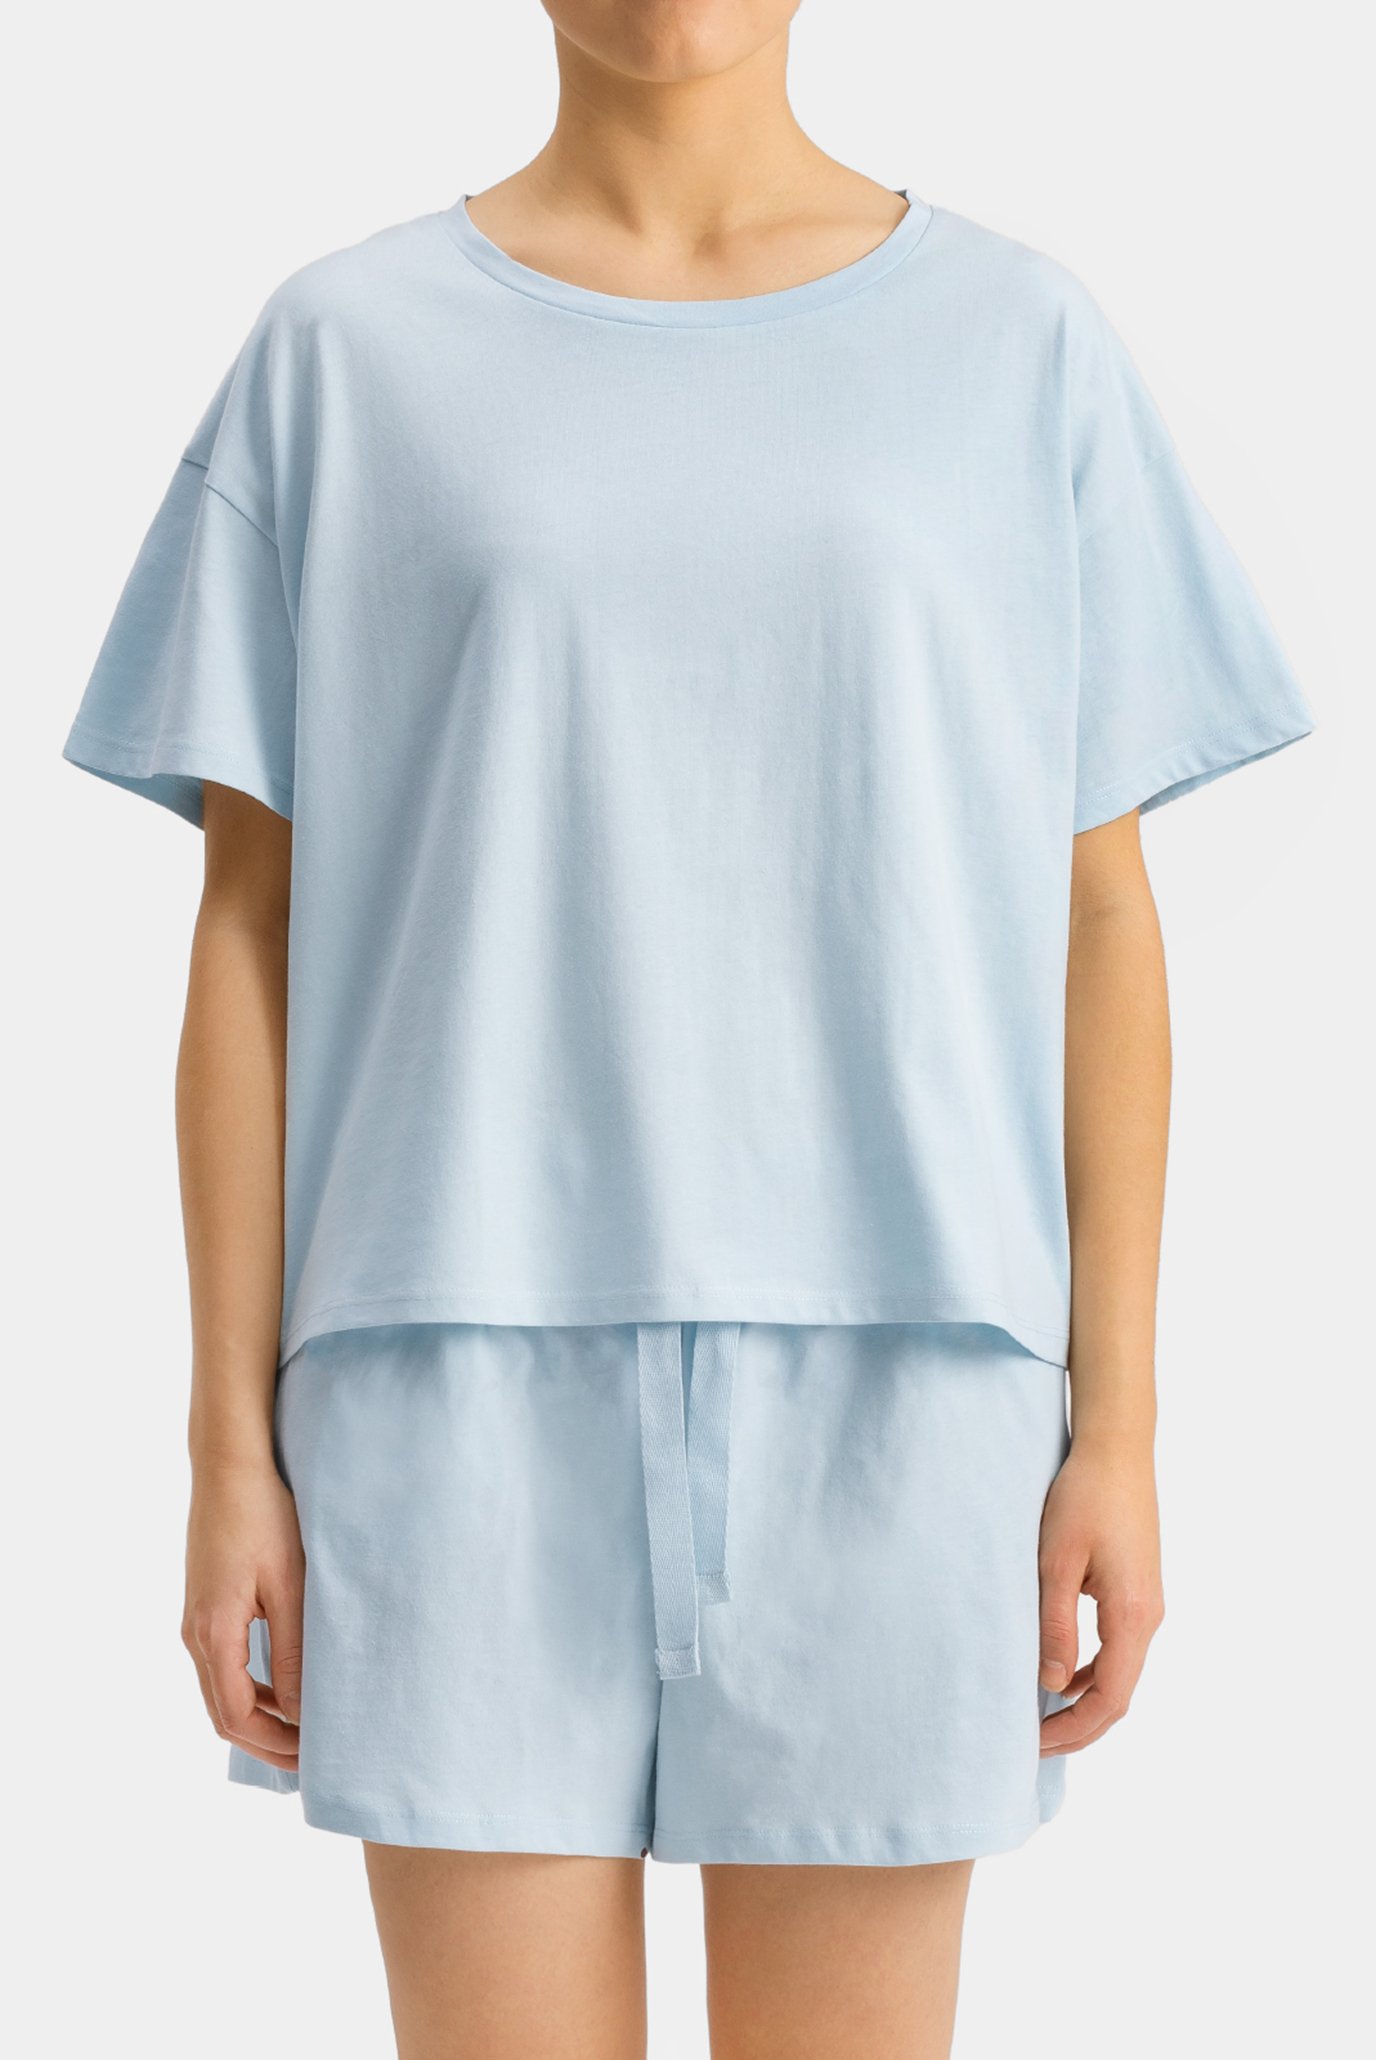 Женская голубая пижама (футболка, шорты) 1